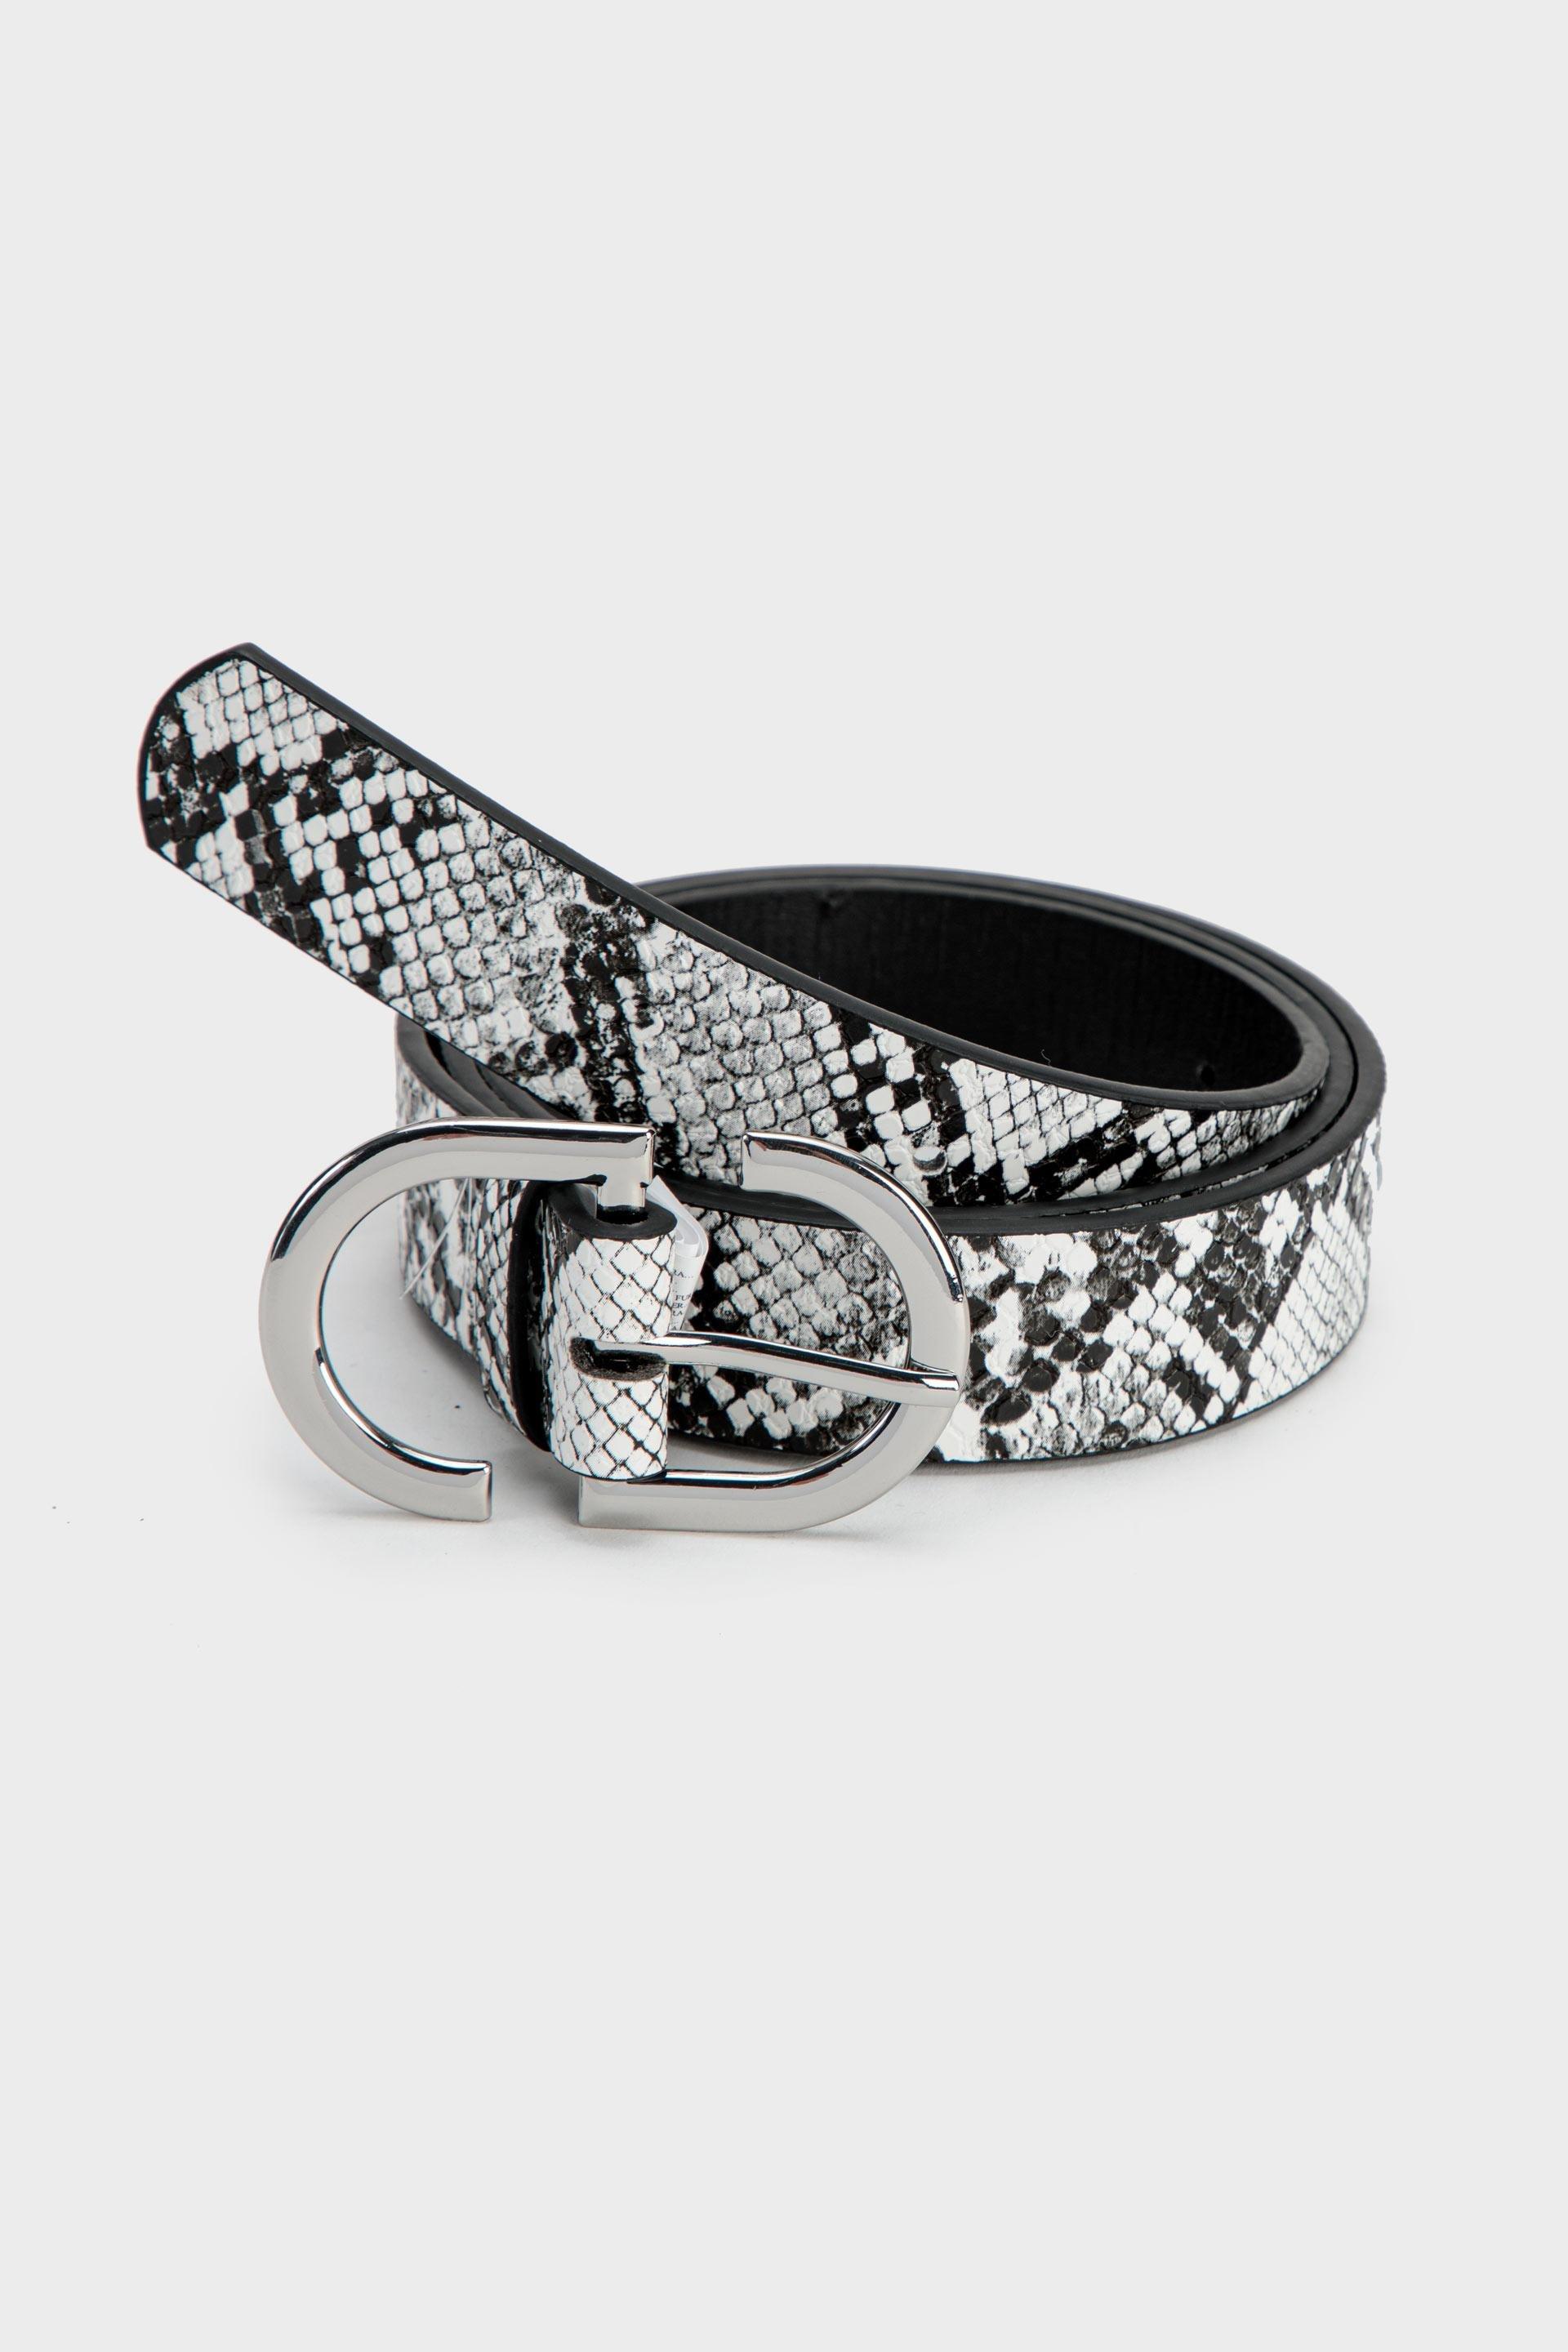 Punt Roma - White Animal Print Waist Belt